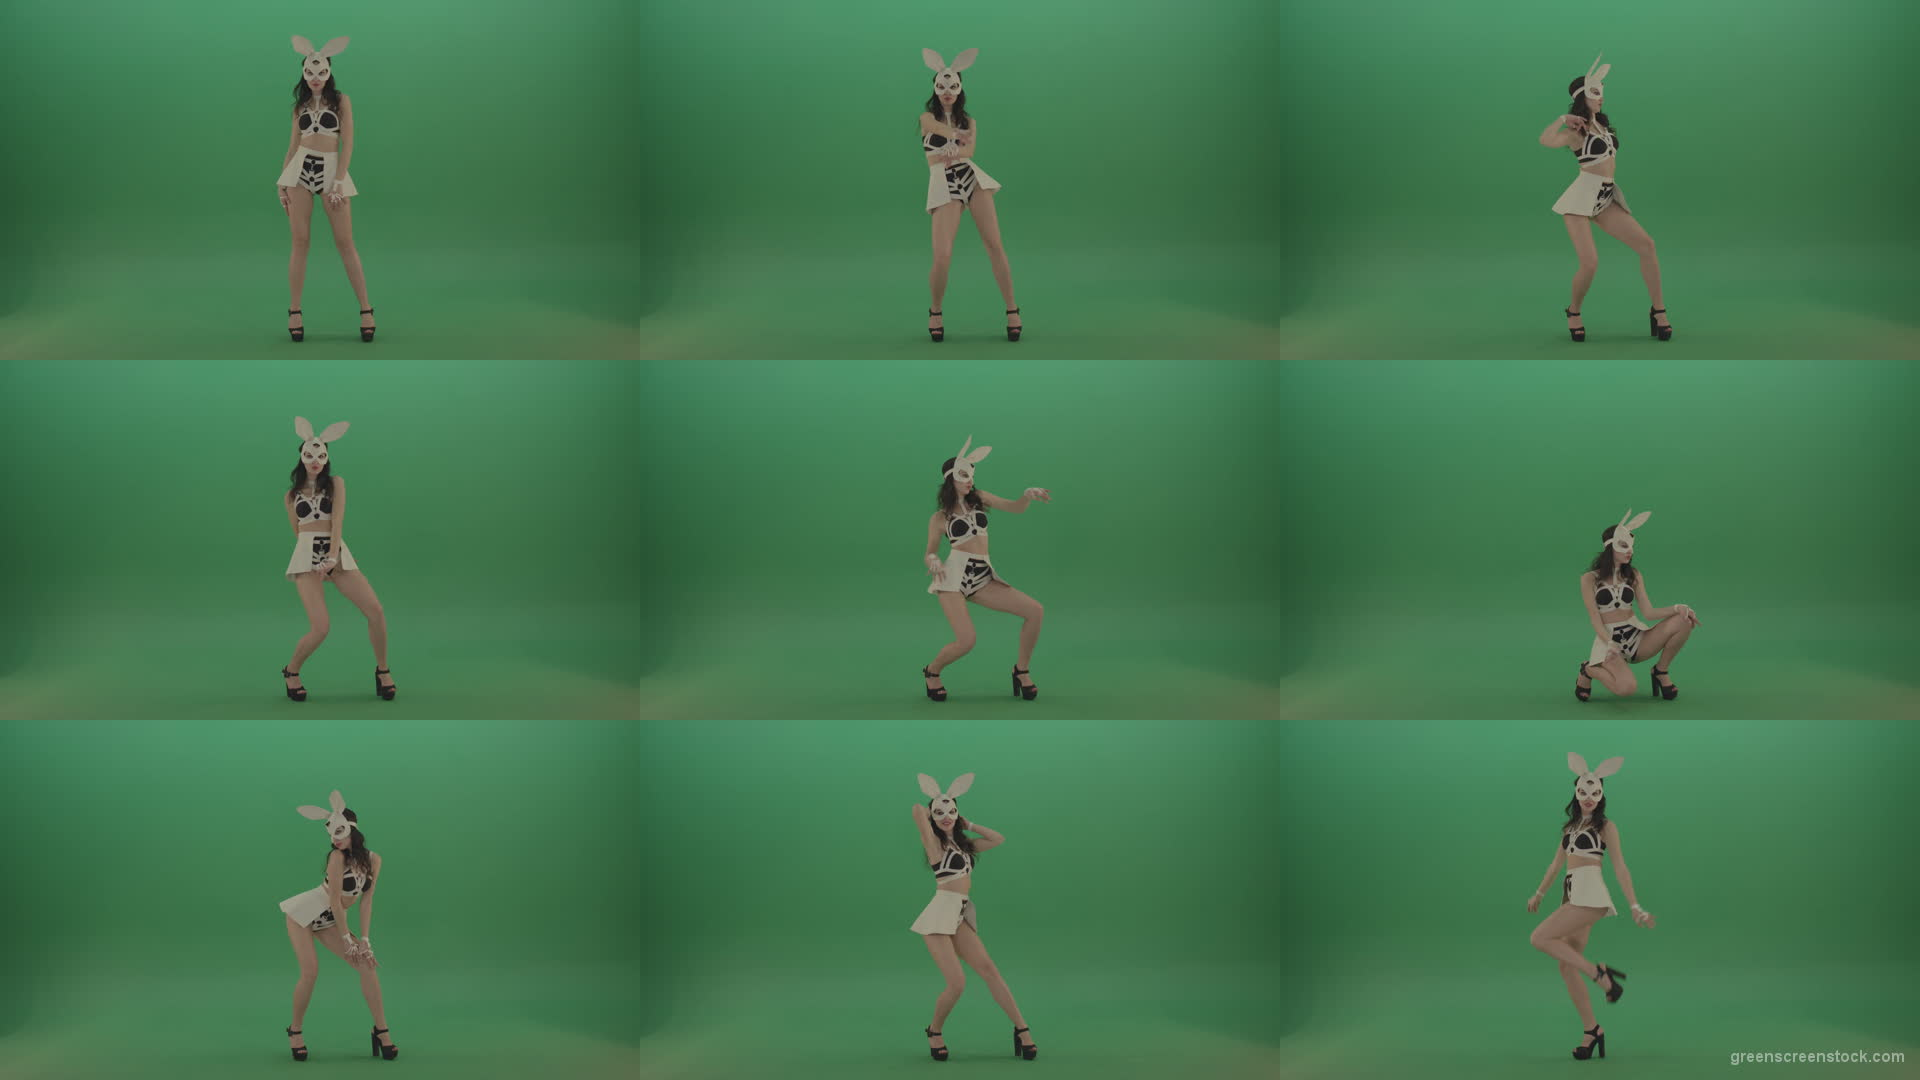 Sexy-posing-Bunny-Girl-dancing-Go-Go-Rabbit-Dance-over-Green-Screen-1920 Green Screen Stock